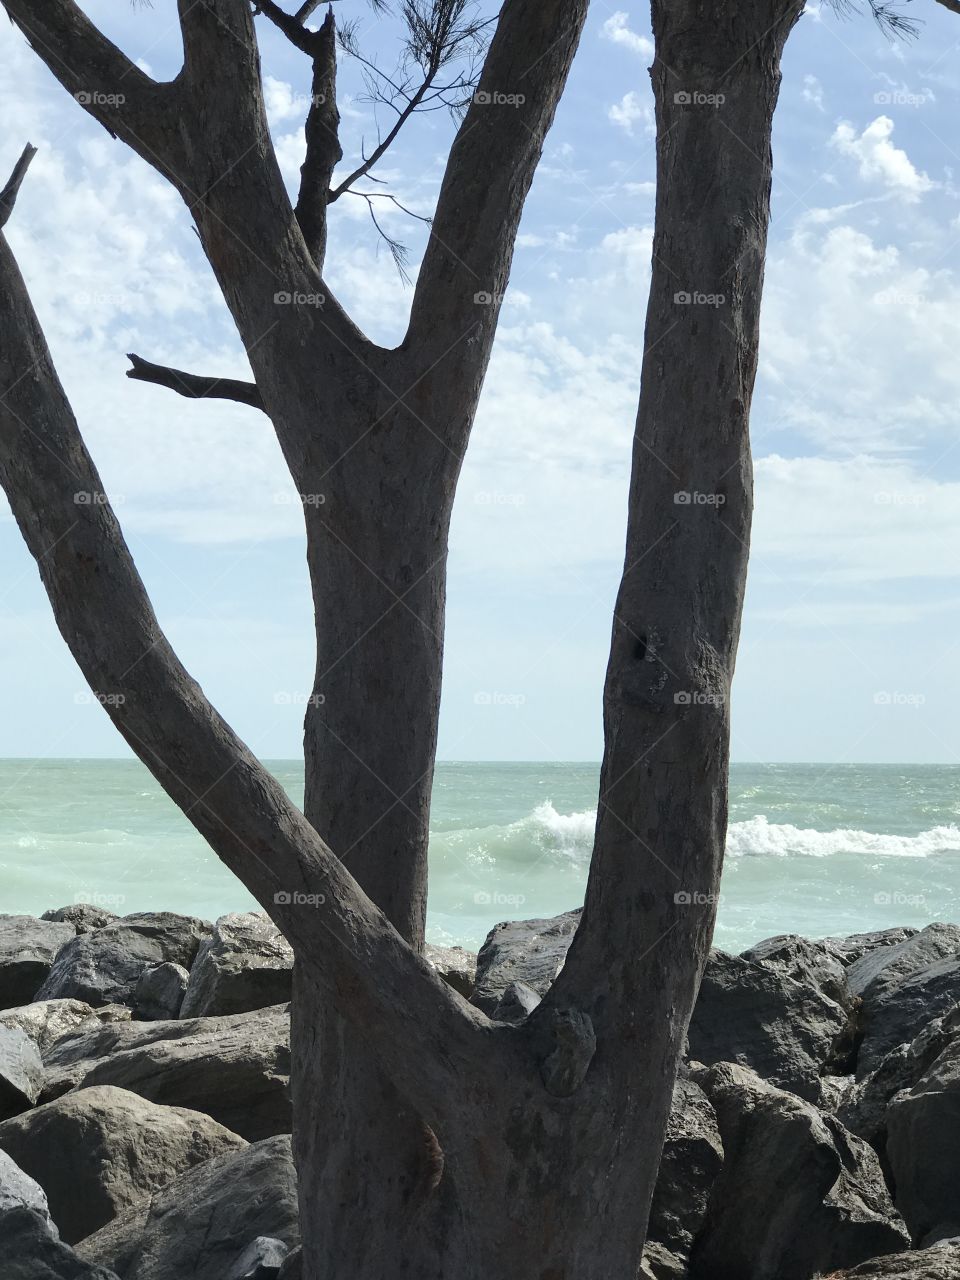 Tree at the beach park 